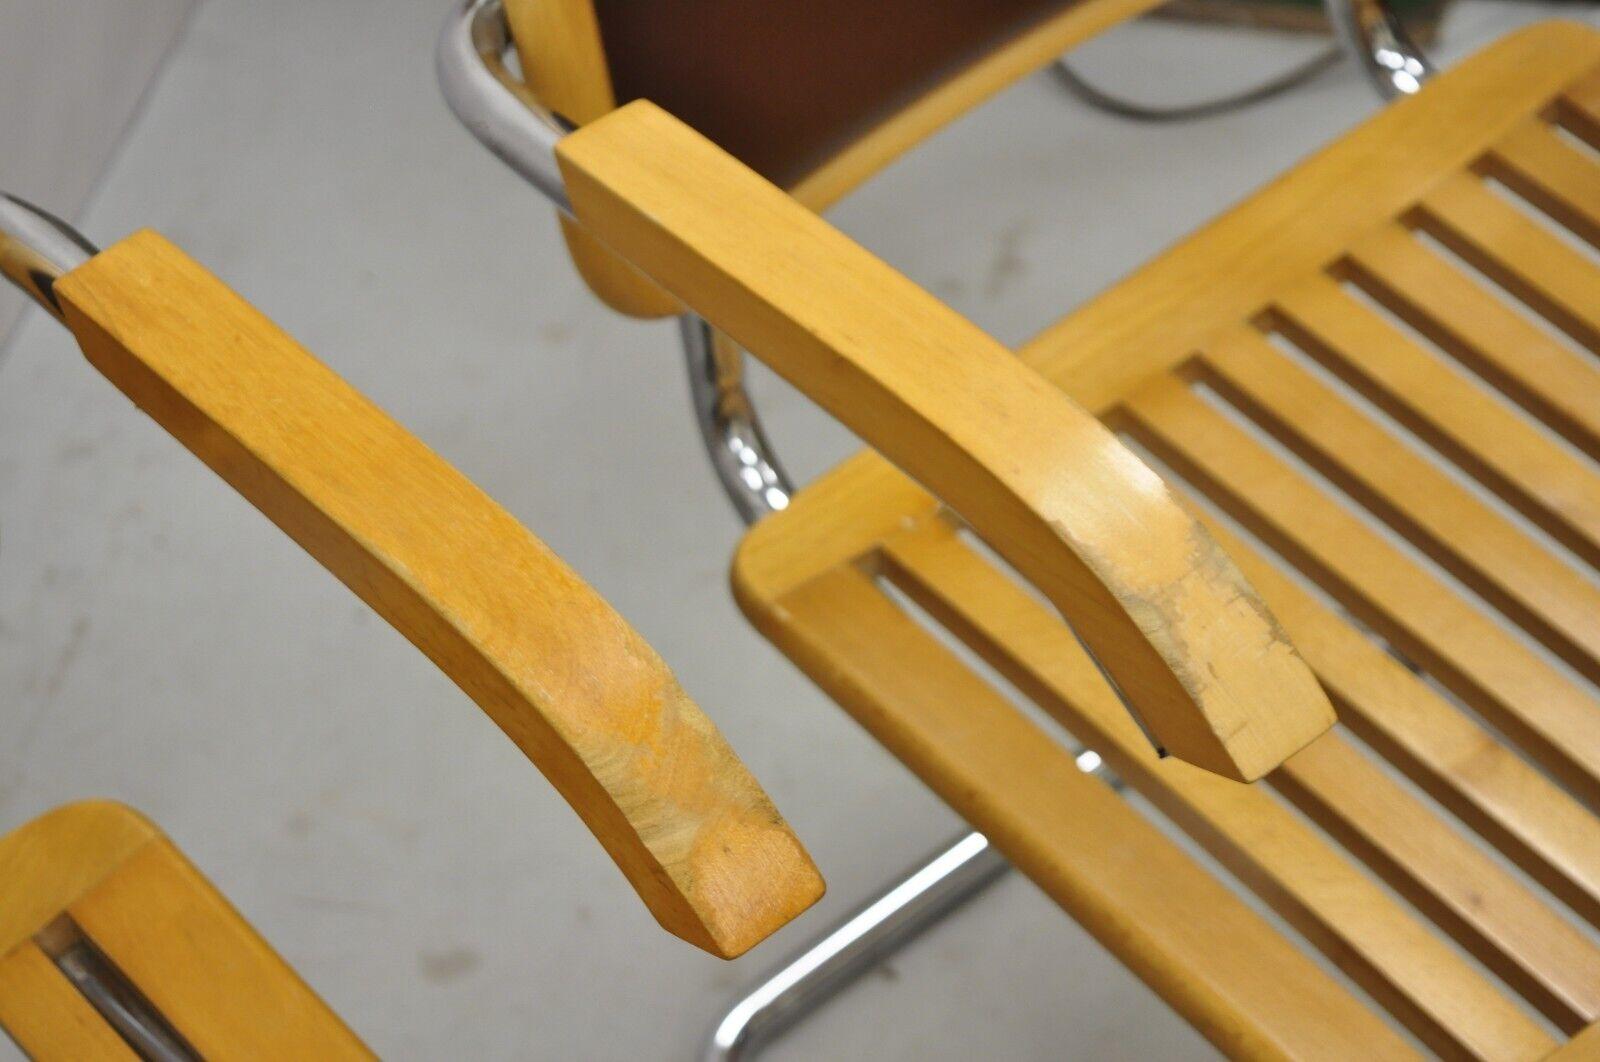 20th Century Marcel Breuer Cesca Chair Cantilever Chrome Frame Wood Seat, a Pair For Sale